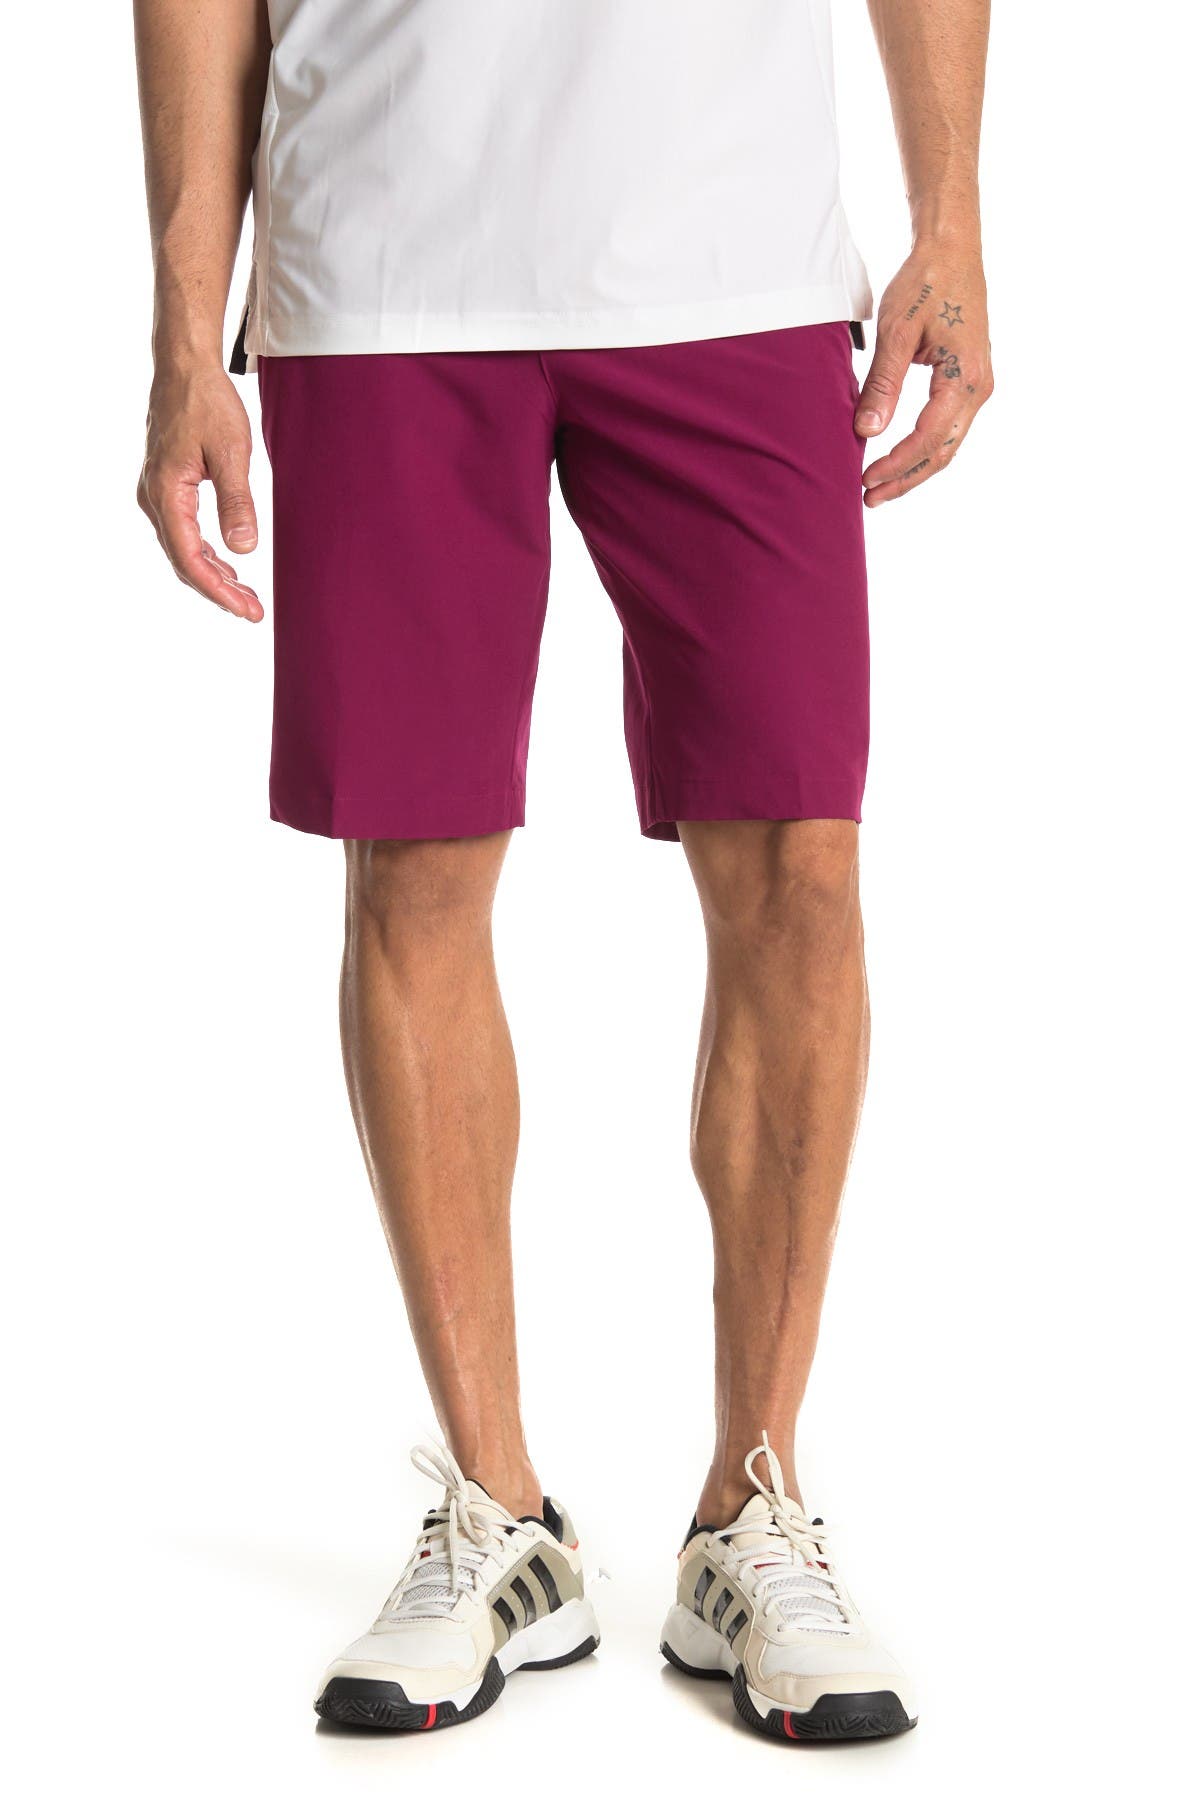 Adidas Golf Ultimate365 Shorts In Medium Pink5